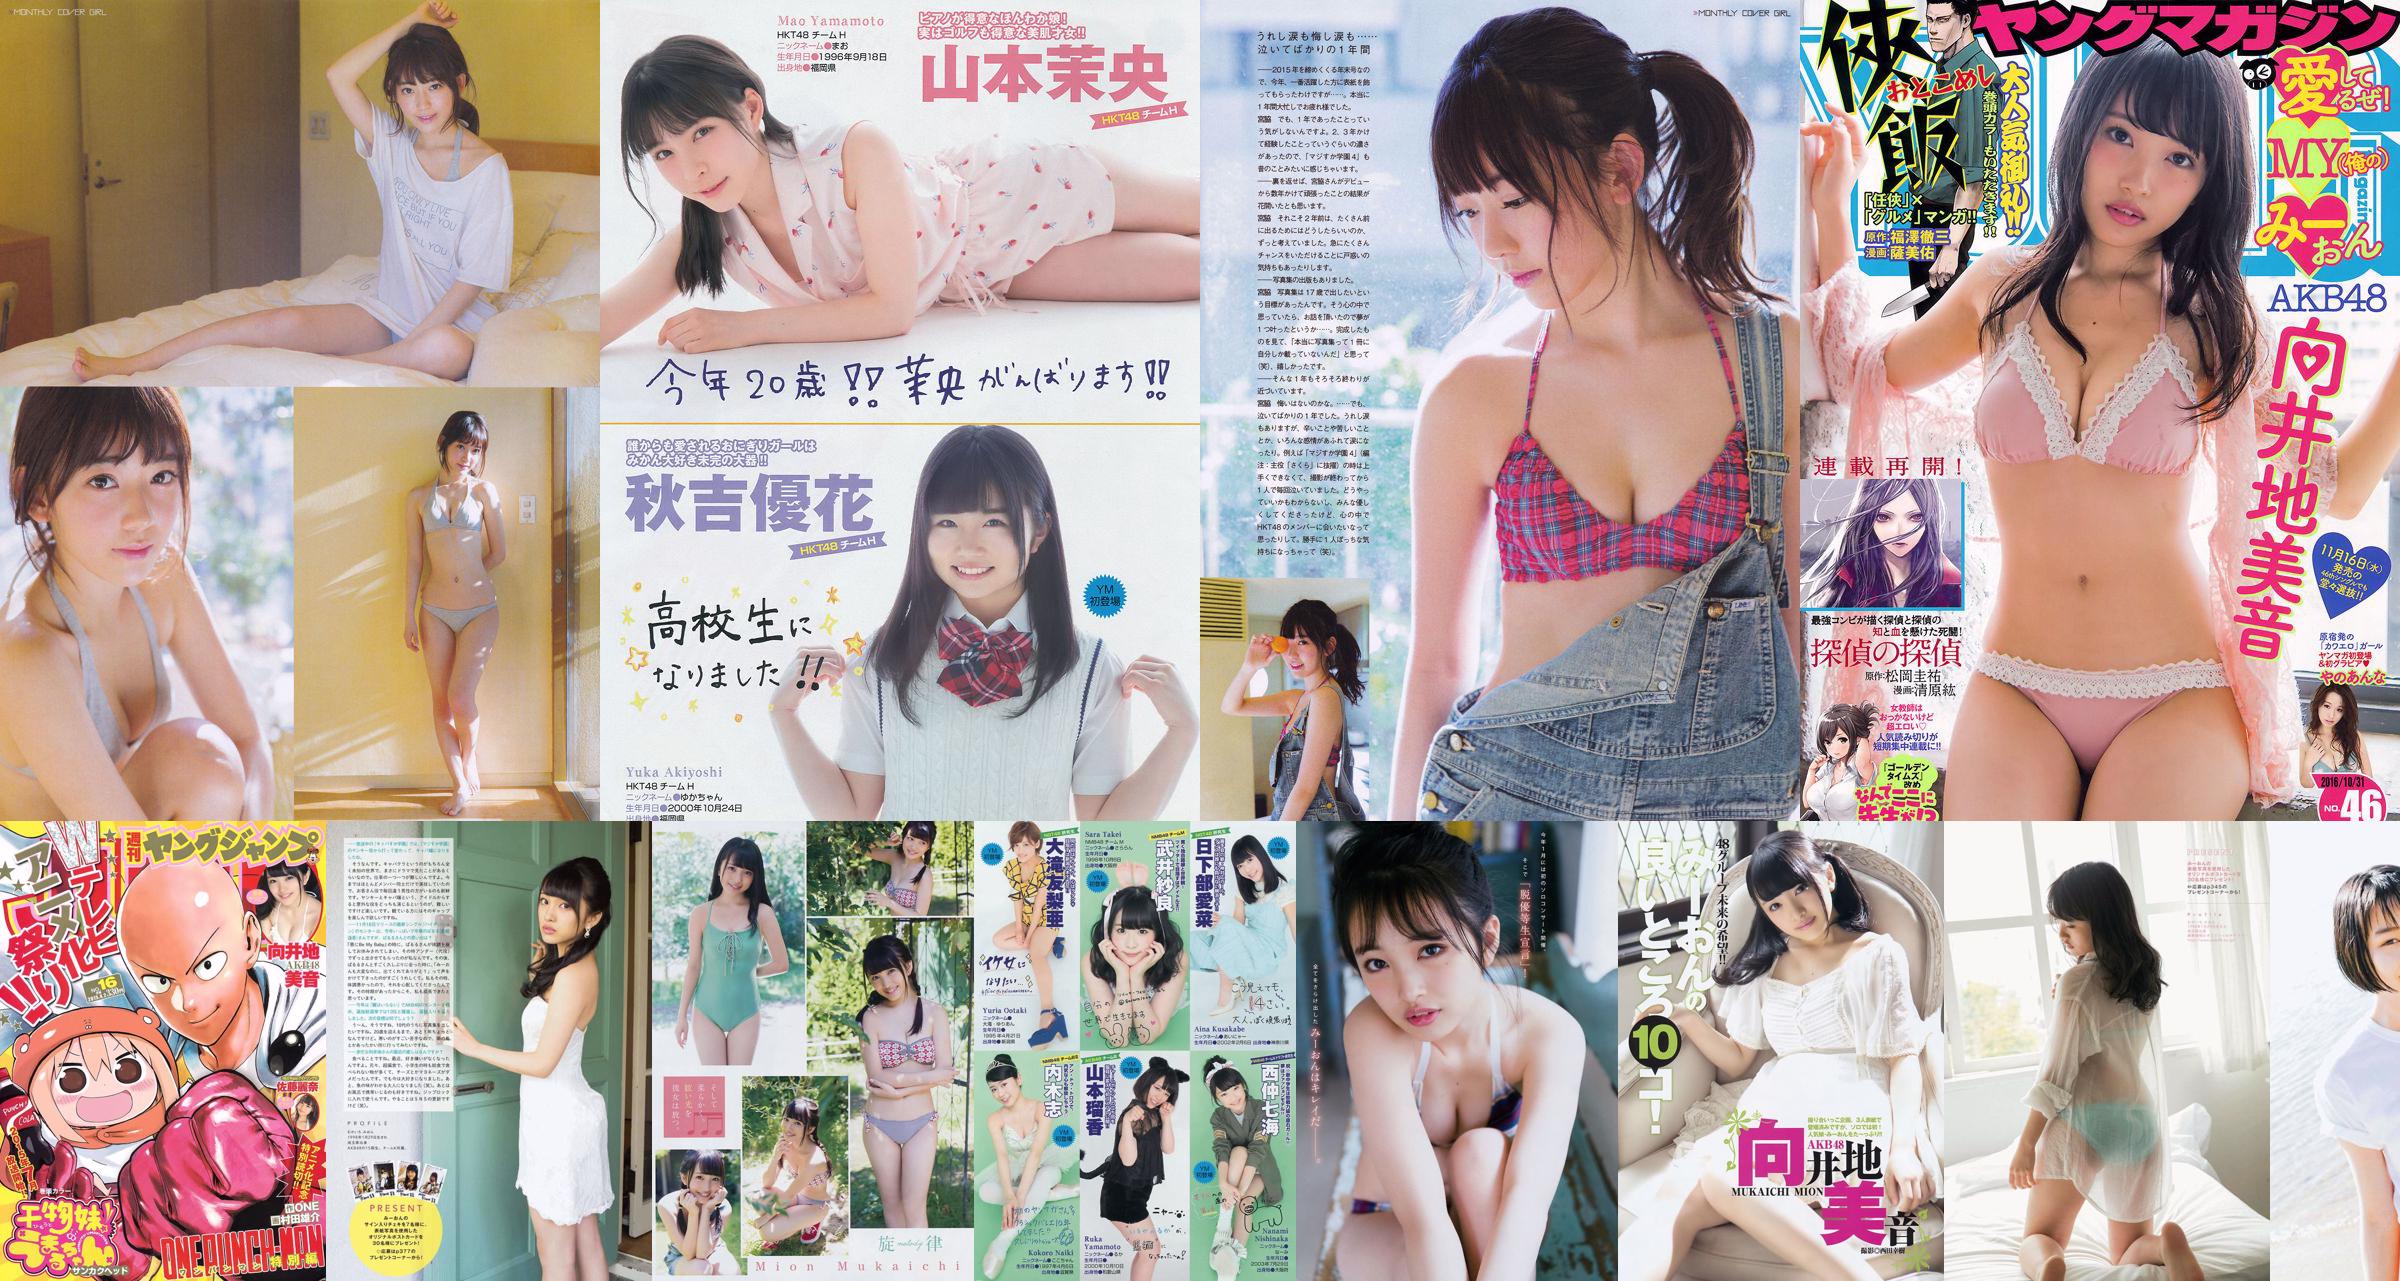 [Young Magazine] Mukaiji No.28 Photo Magazine 2016 No.503d19 Page 6